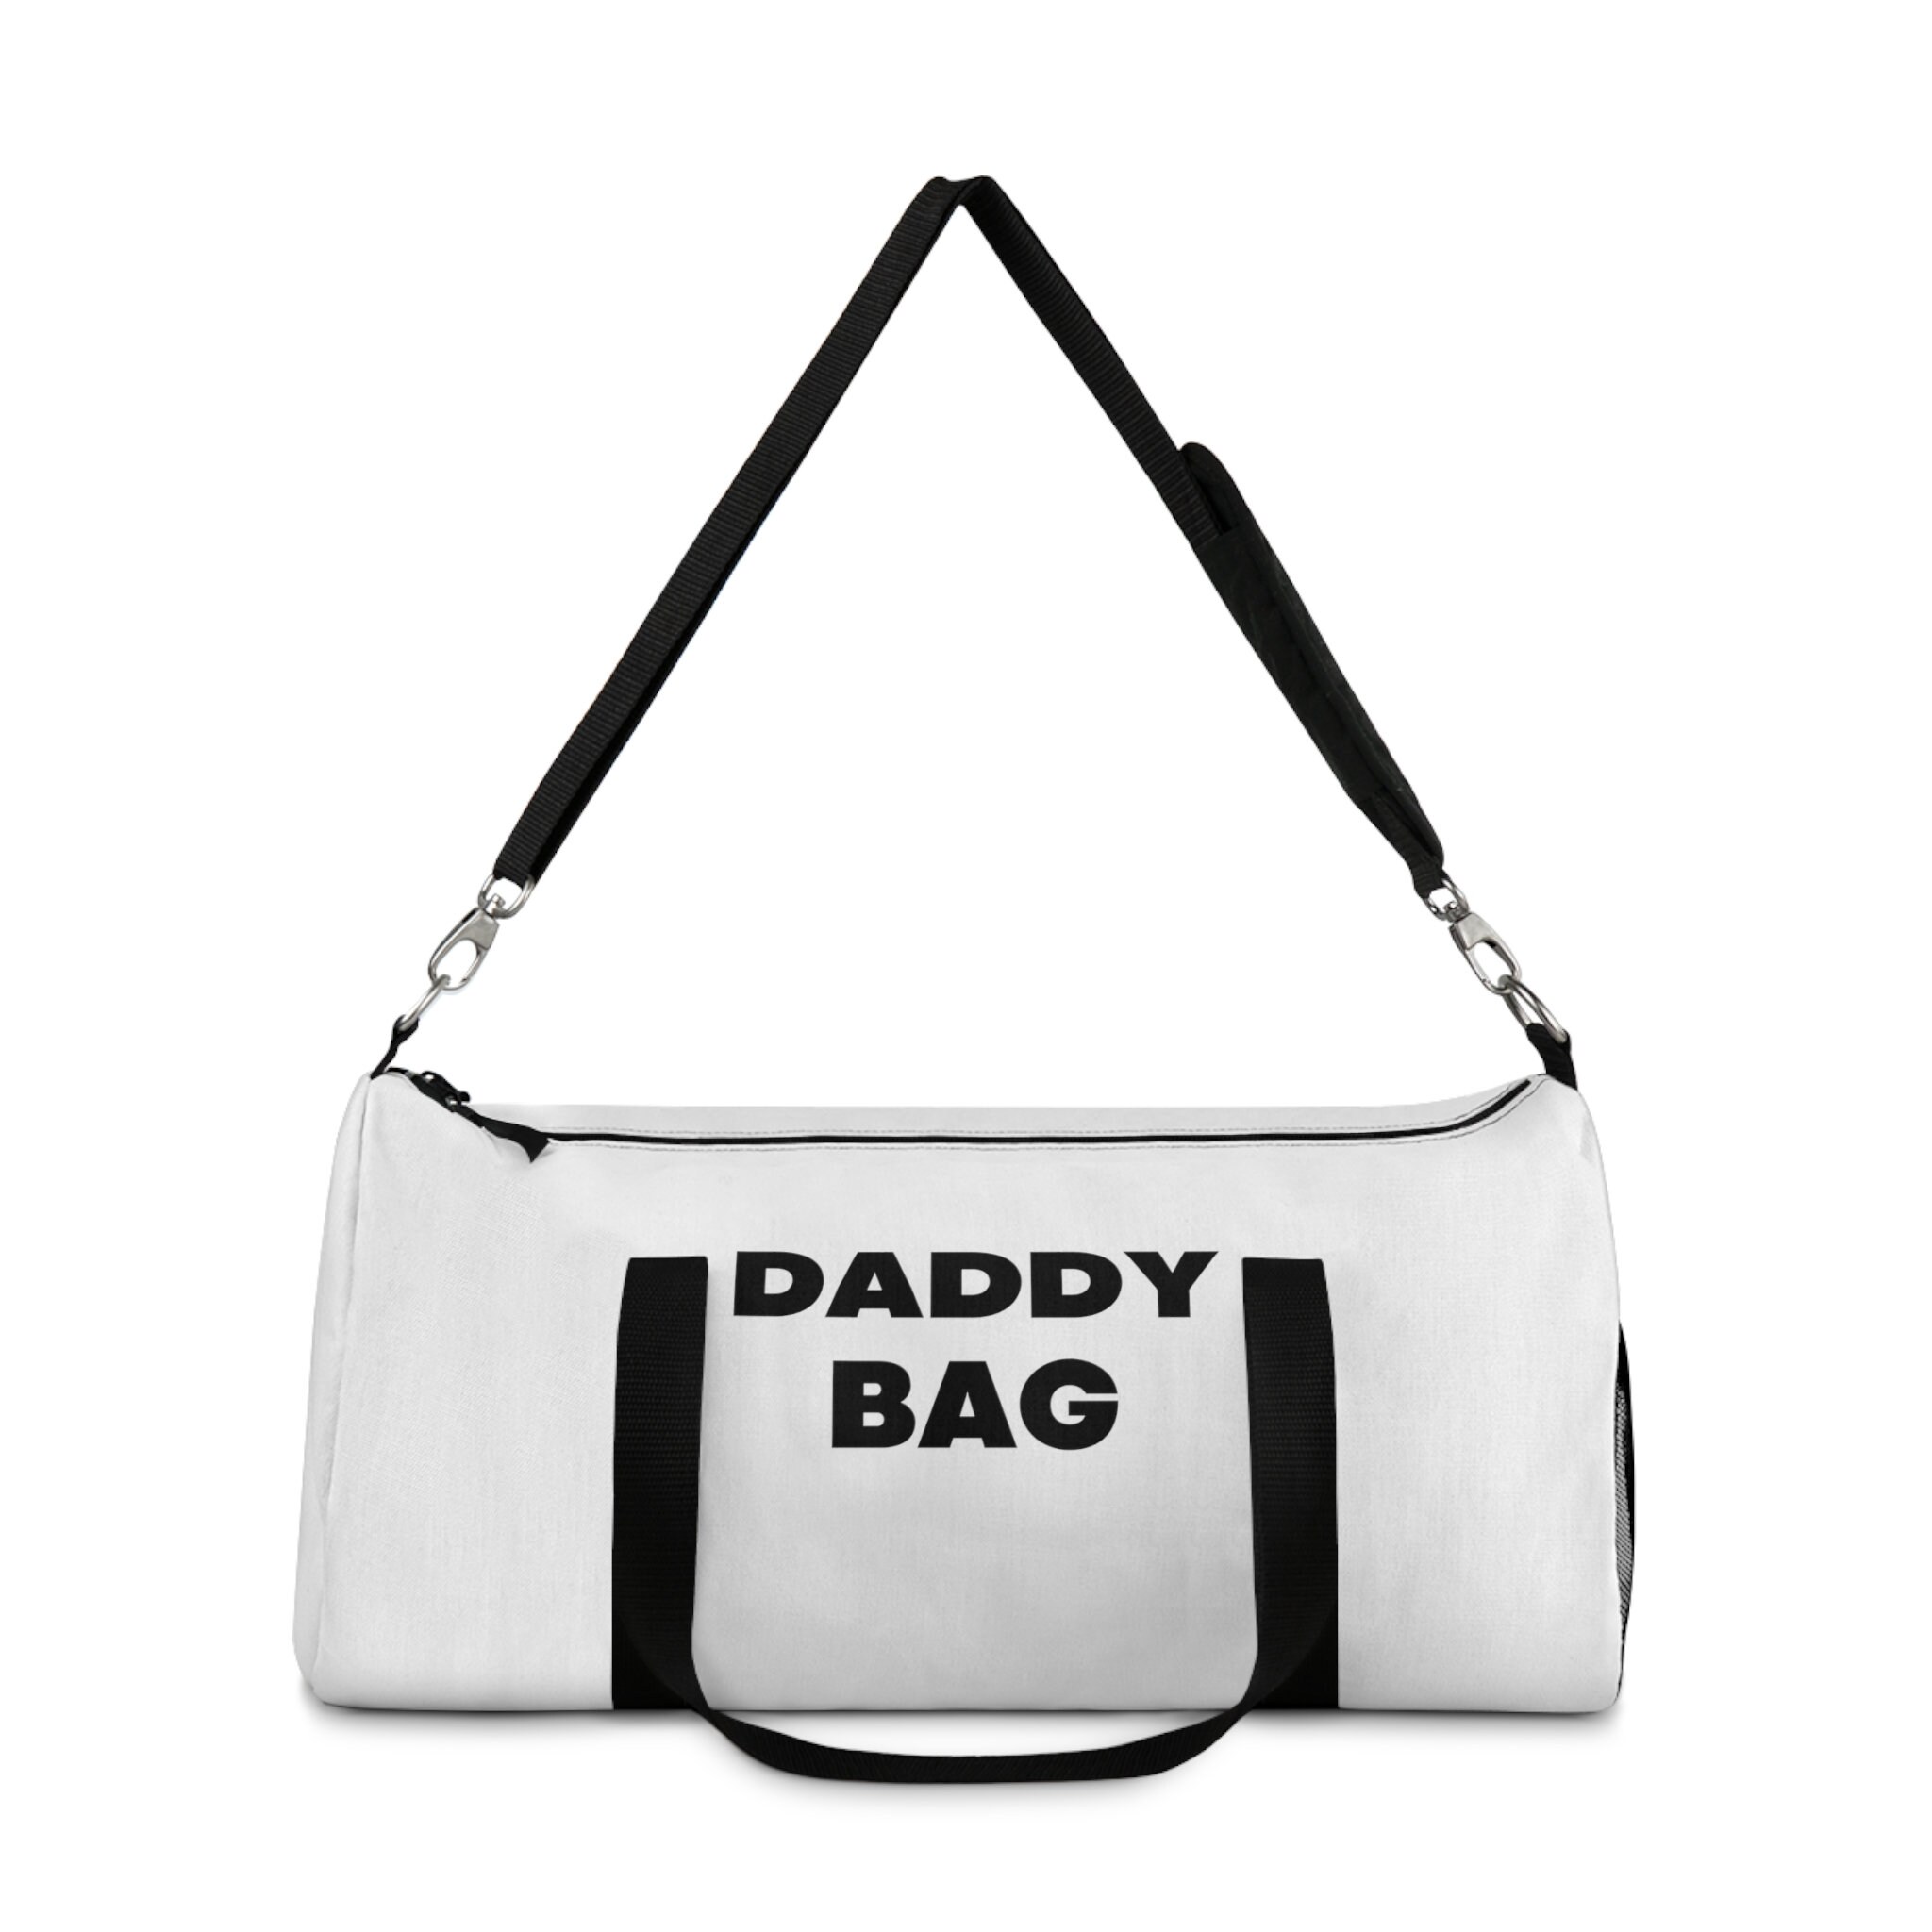  Hulsin Travel Bag Weekender Bag - Large Duffel Bag for Travel,  38L Carry on Overnight Bag, Hospital Bag for Women (White)